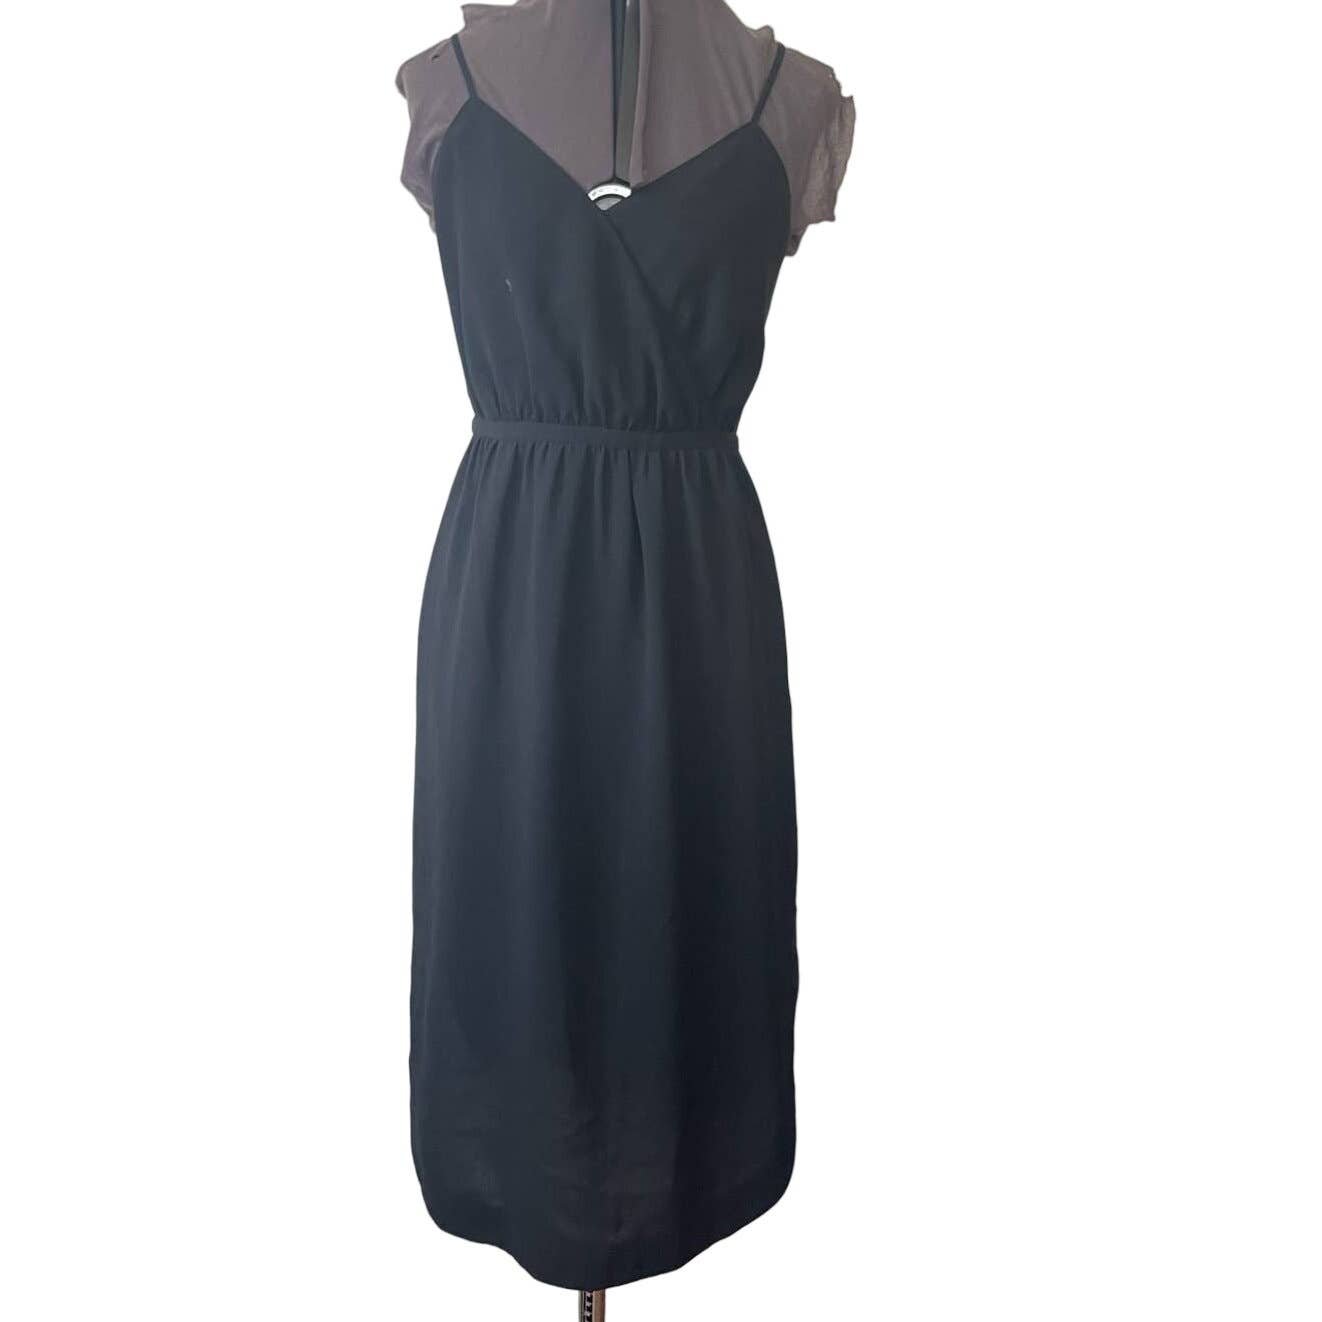 save up to 70% NWT Size 2 Madewell Surplice Camisole Dress hu0IfPRZe Great